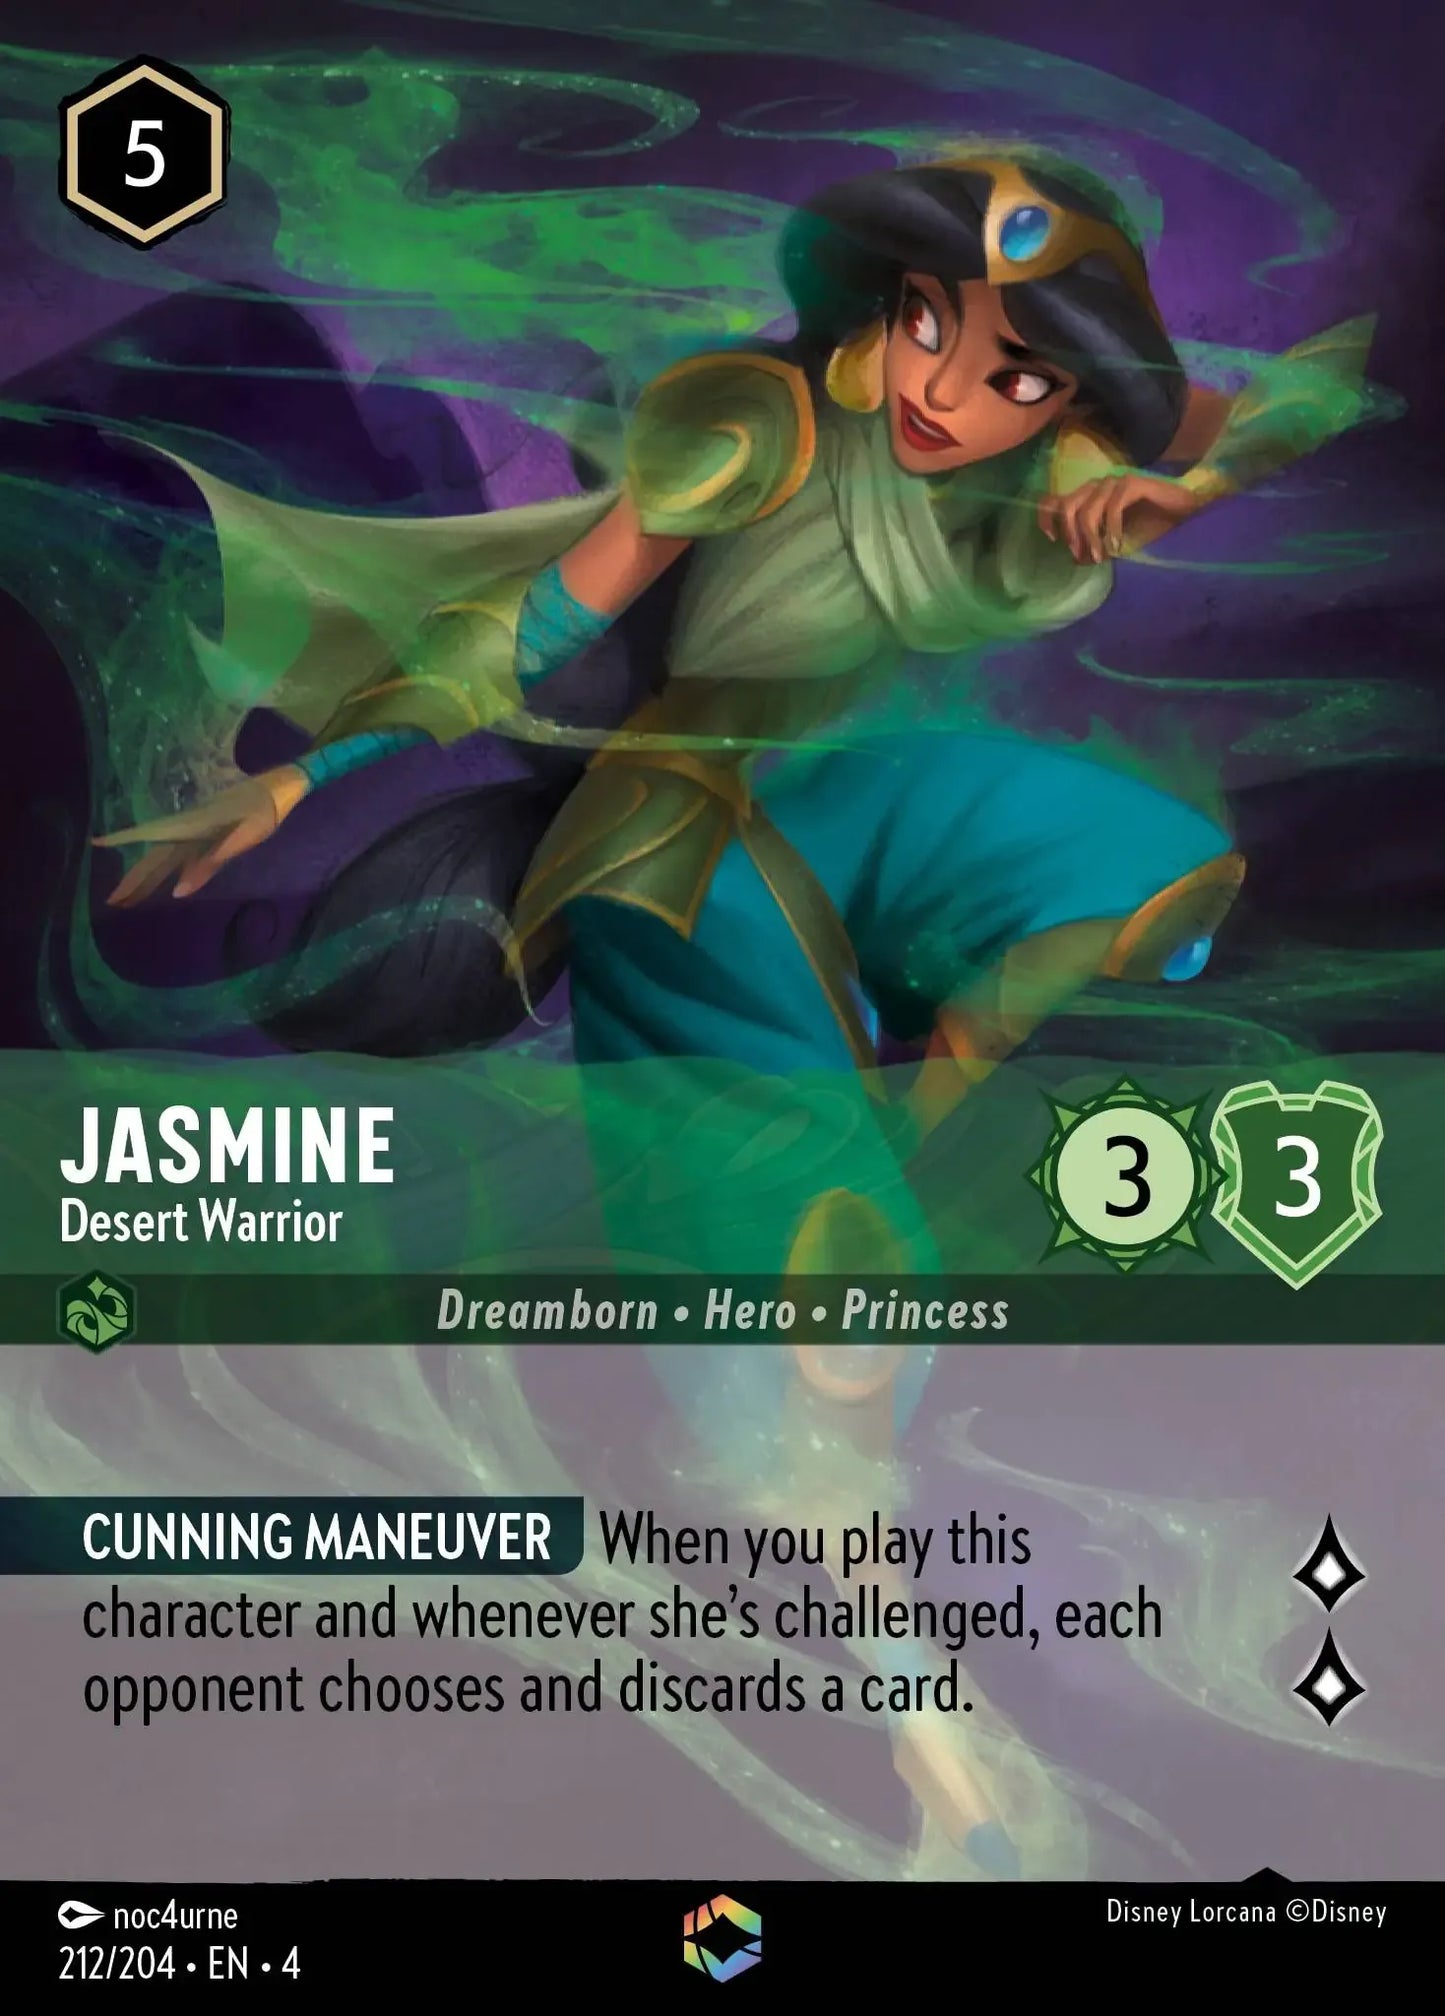 (212) Lorcana Ursula's Return Single: Jasmine - Desert Warrior (V.2)  Enchanted